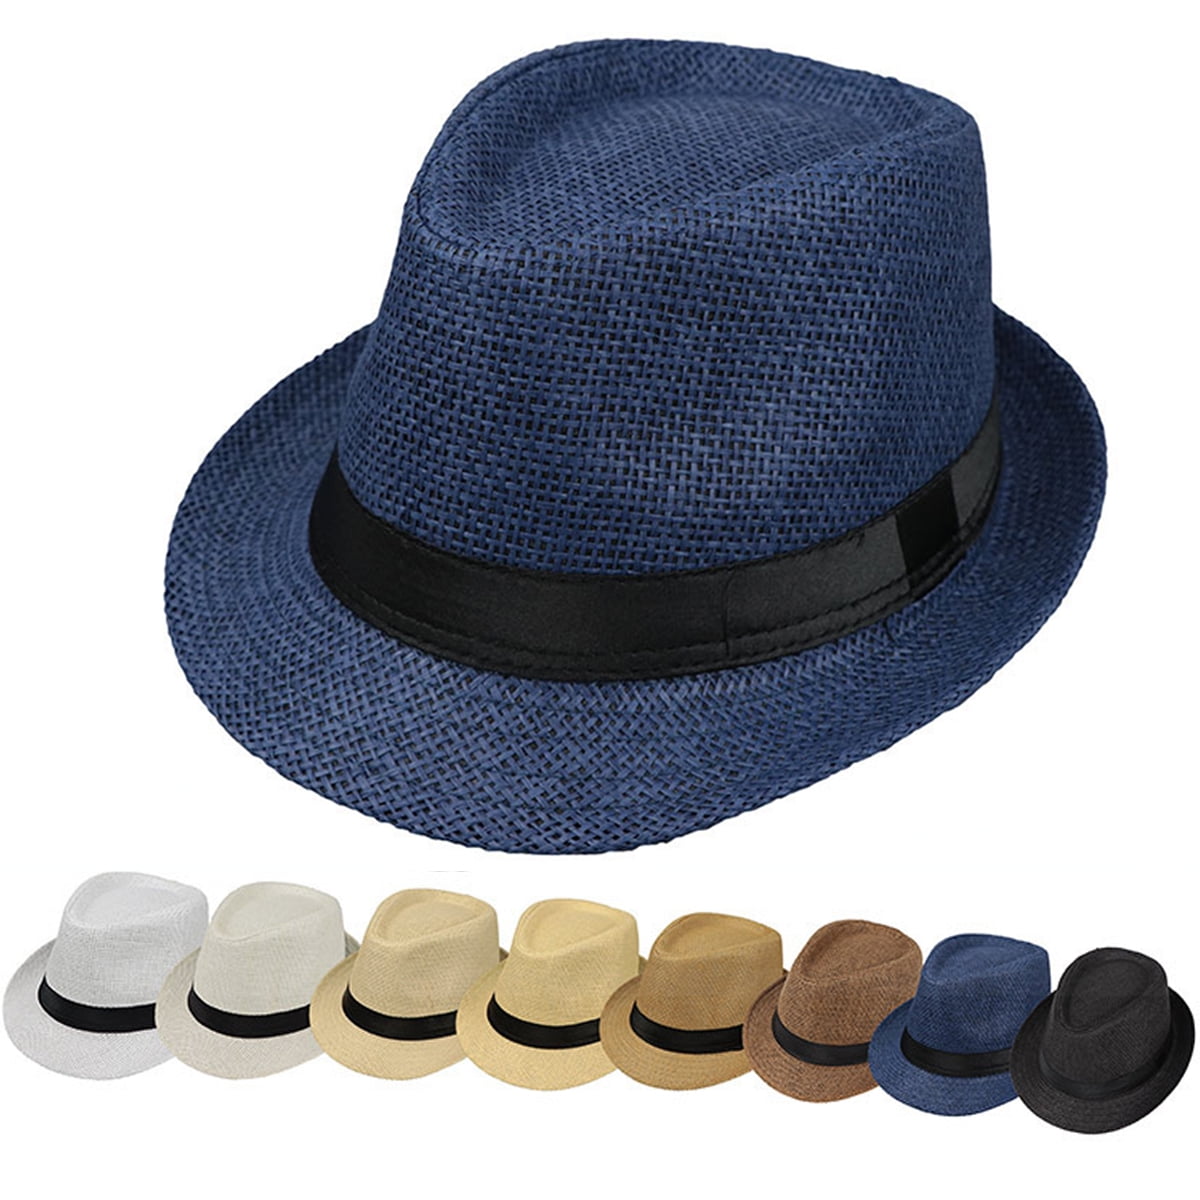 Large Size58 cm New Straw Hat Summer Men Women Wide Brim Beach UV  Protection Sun Hat 